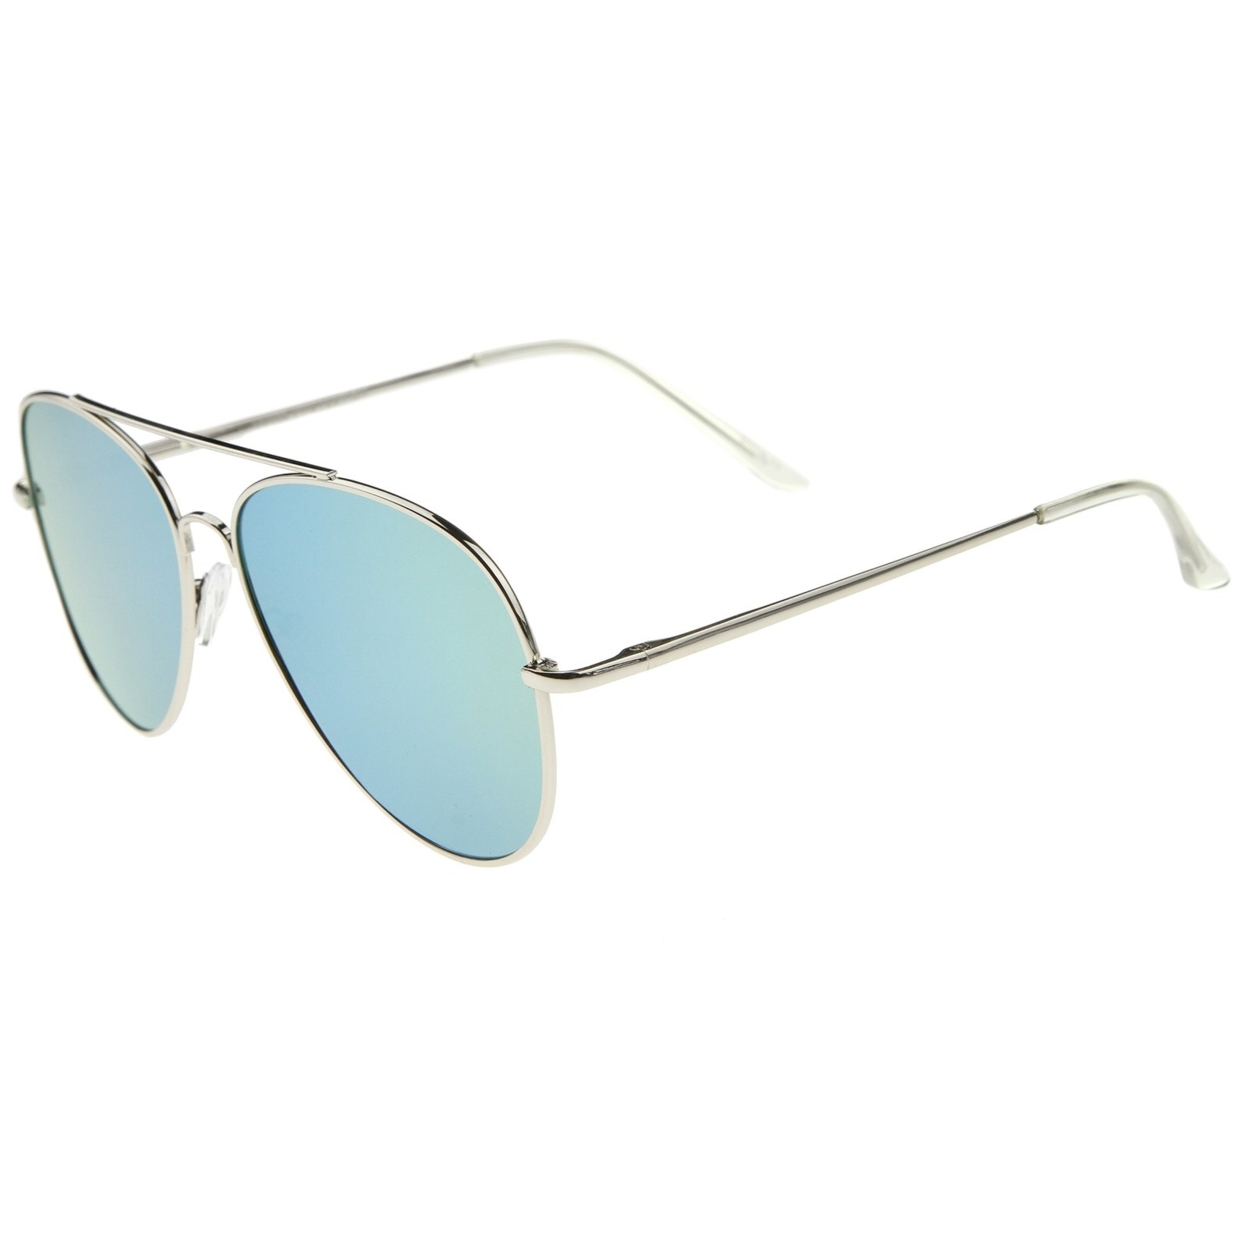 Large Full Metal Color Mirror Teardrop Flat Lens Aviator Sunglasses 60mm - Silver / Yellow Mirror